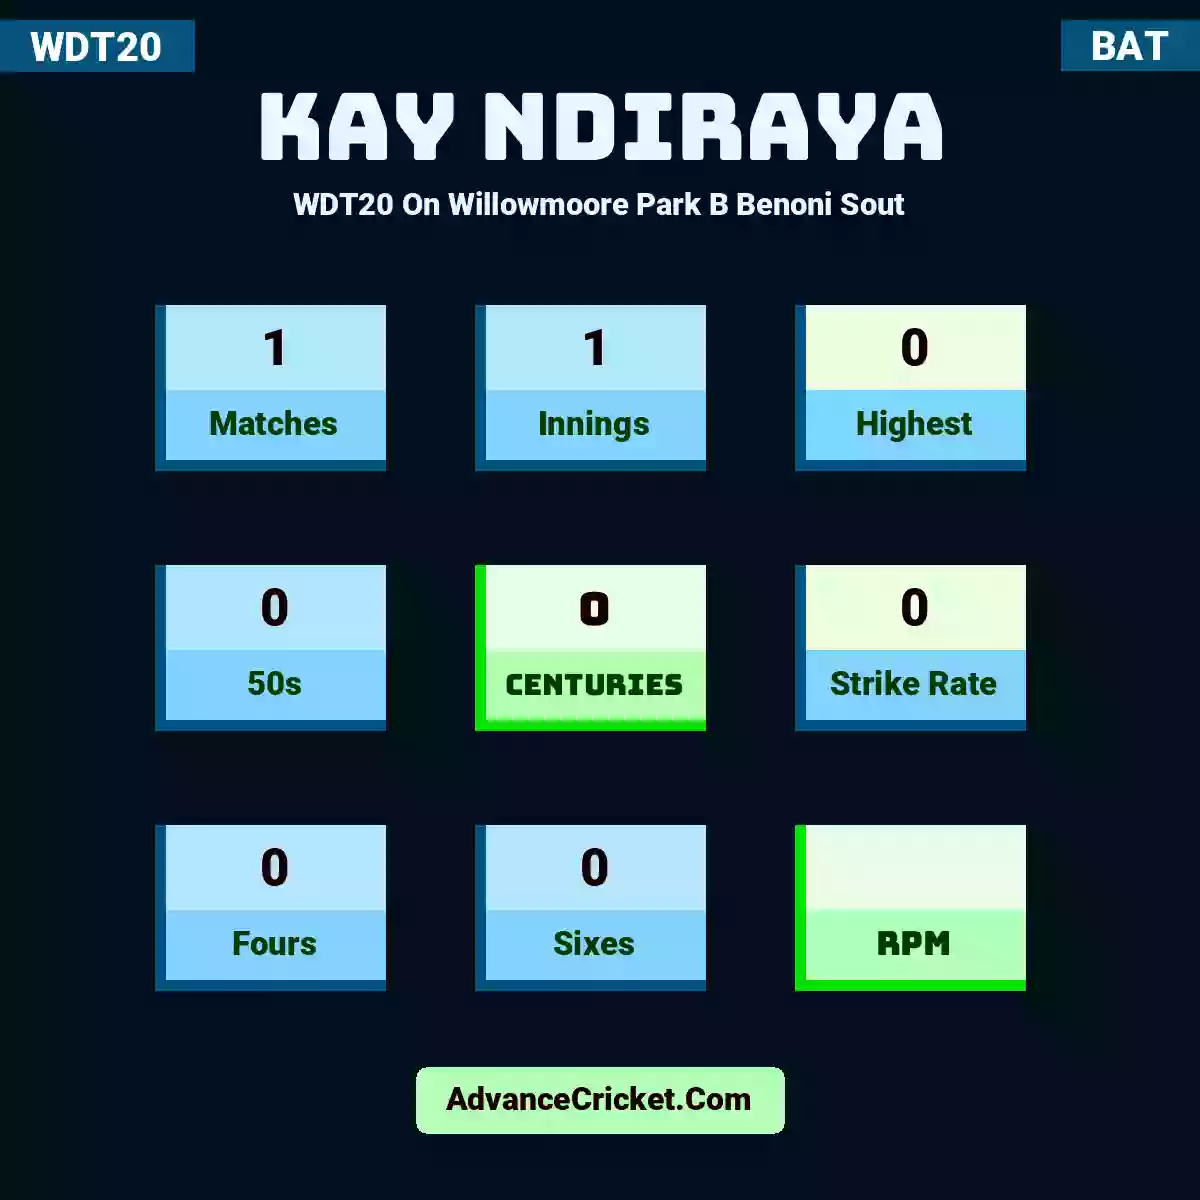 Kay Ndiraya WDT20  On Willowmoore Park B Benoni Sout, Kay Ndiraya played 1 matches, scored 0 runs as highest, 0 half-centuries, and 0 centuries, with a strike rate of 0. K.Ndiraya hit 0 fours and 0 sixes.